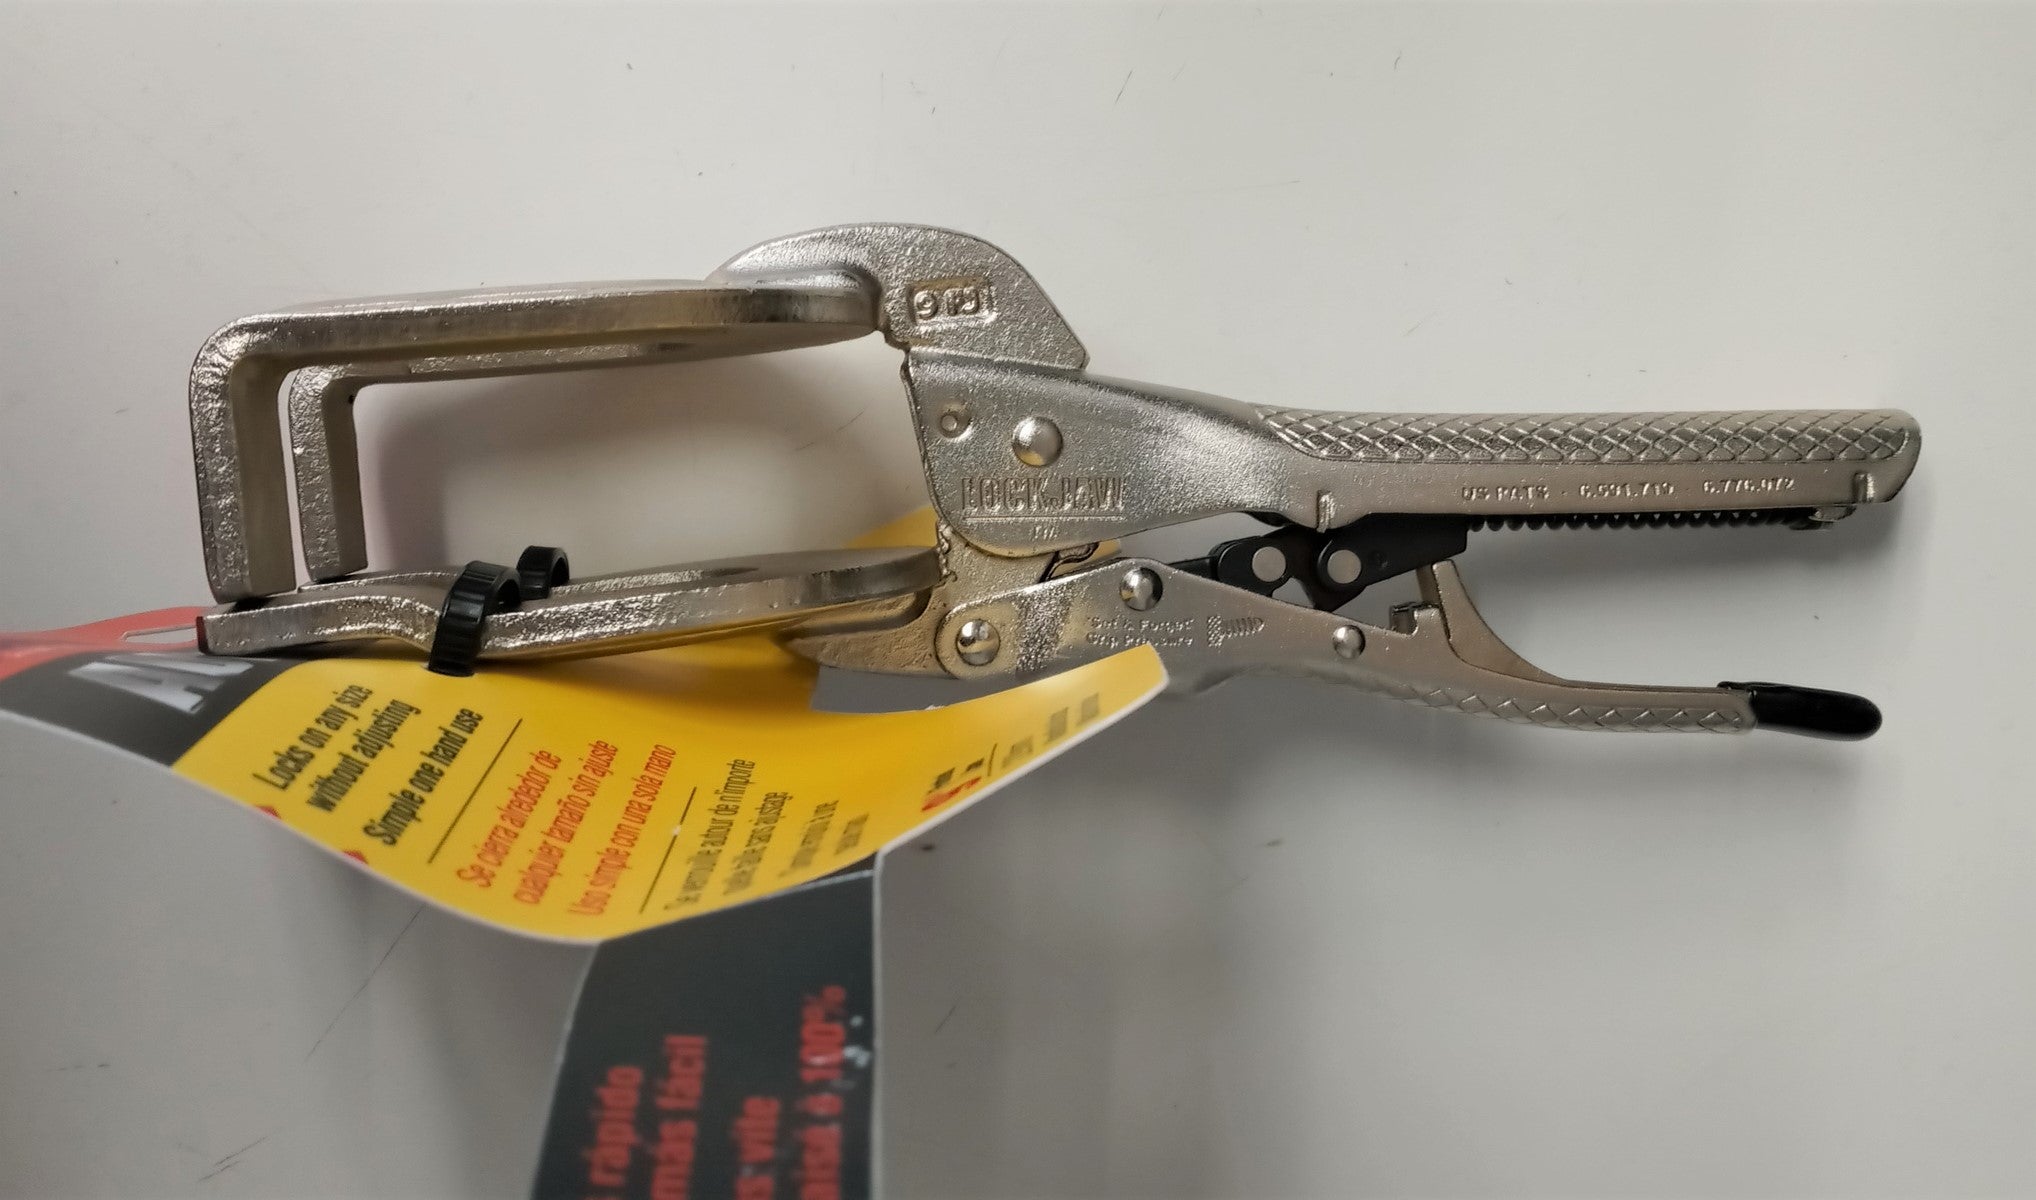 CH Hanson 09500 9 Forked Jaw Self-Adjusting Locking Pliers